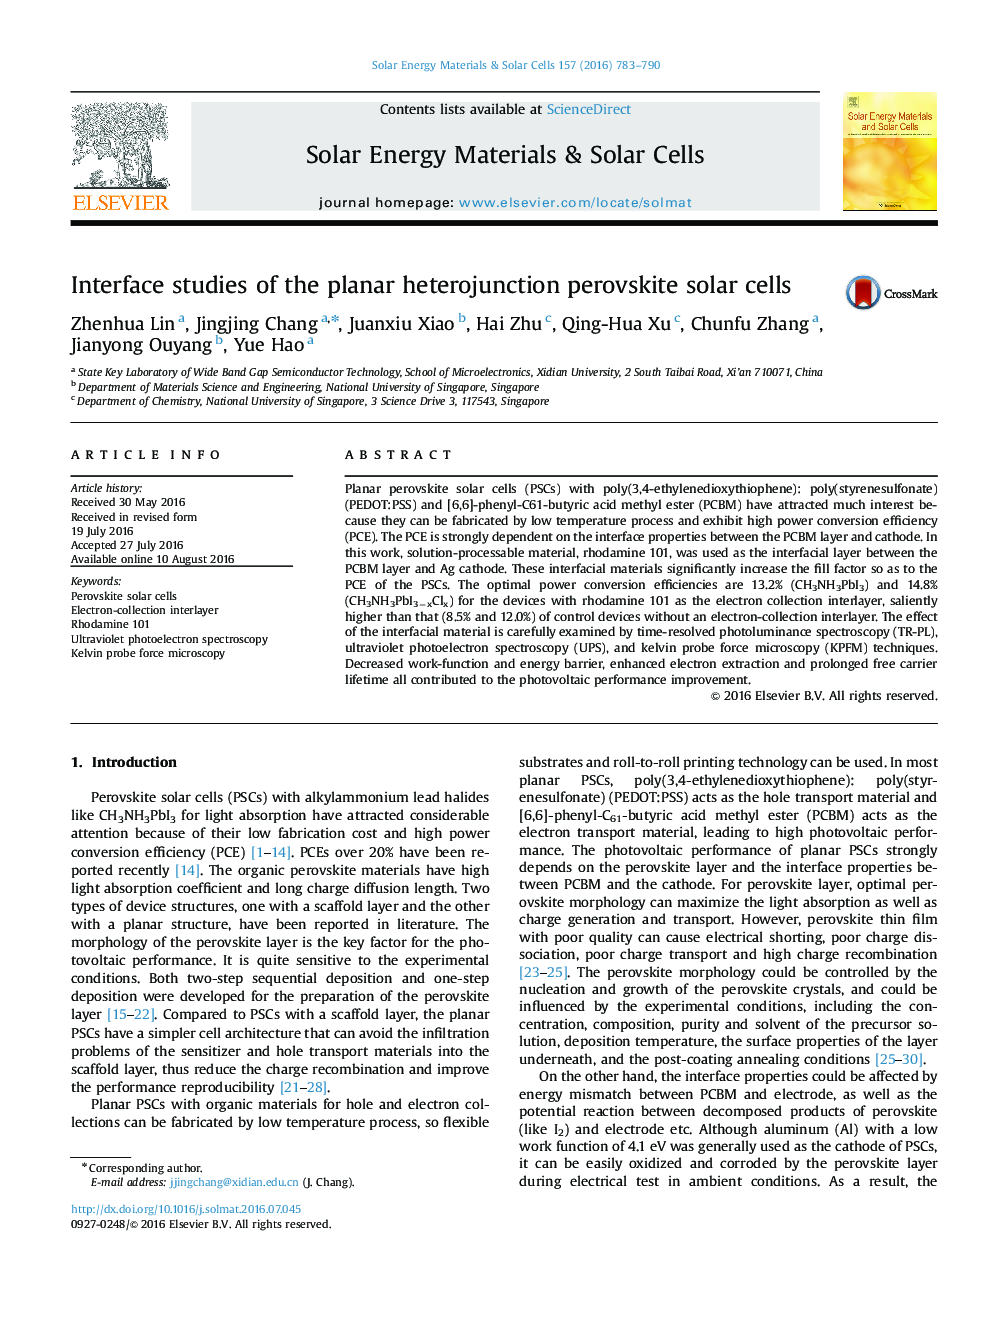 Interface studies of the planar heterojunction perovskite solar cells